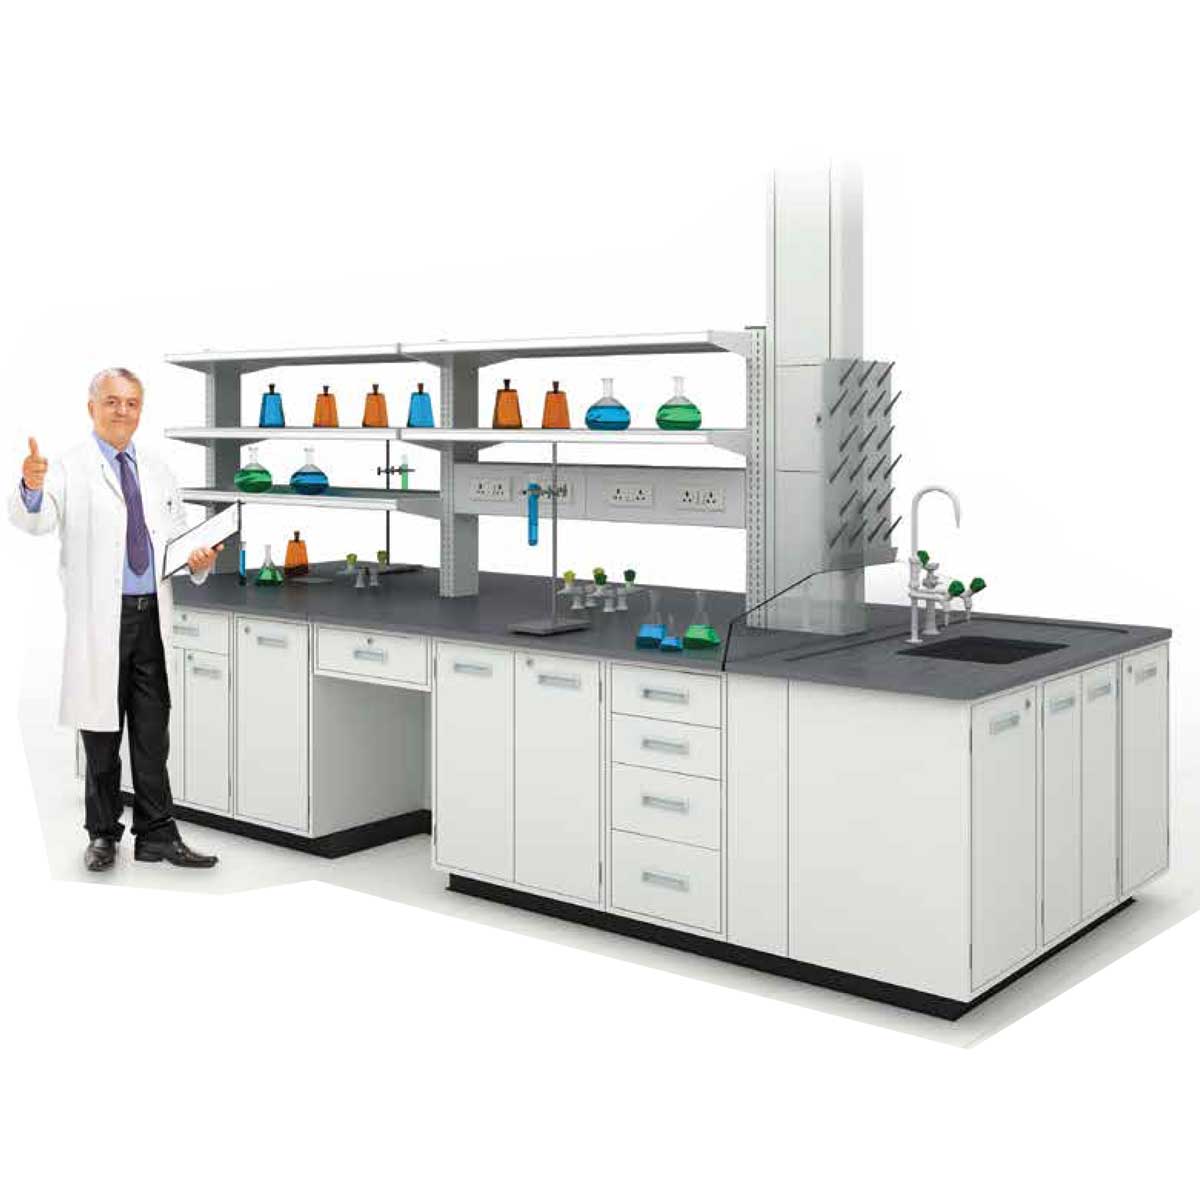 Laboratory Desks Manufacturers, Suppliers in Karol Bagh